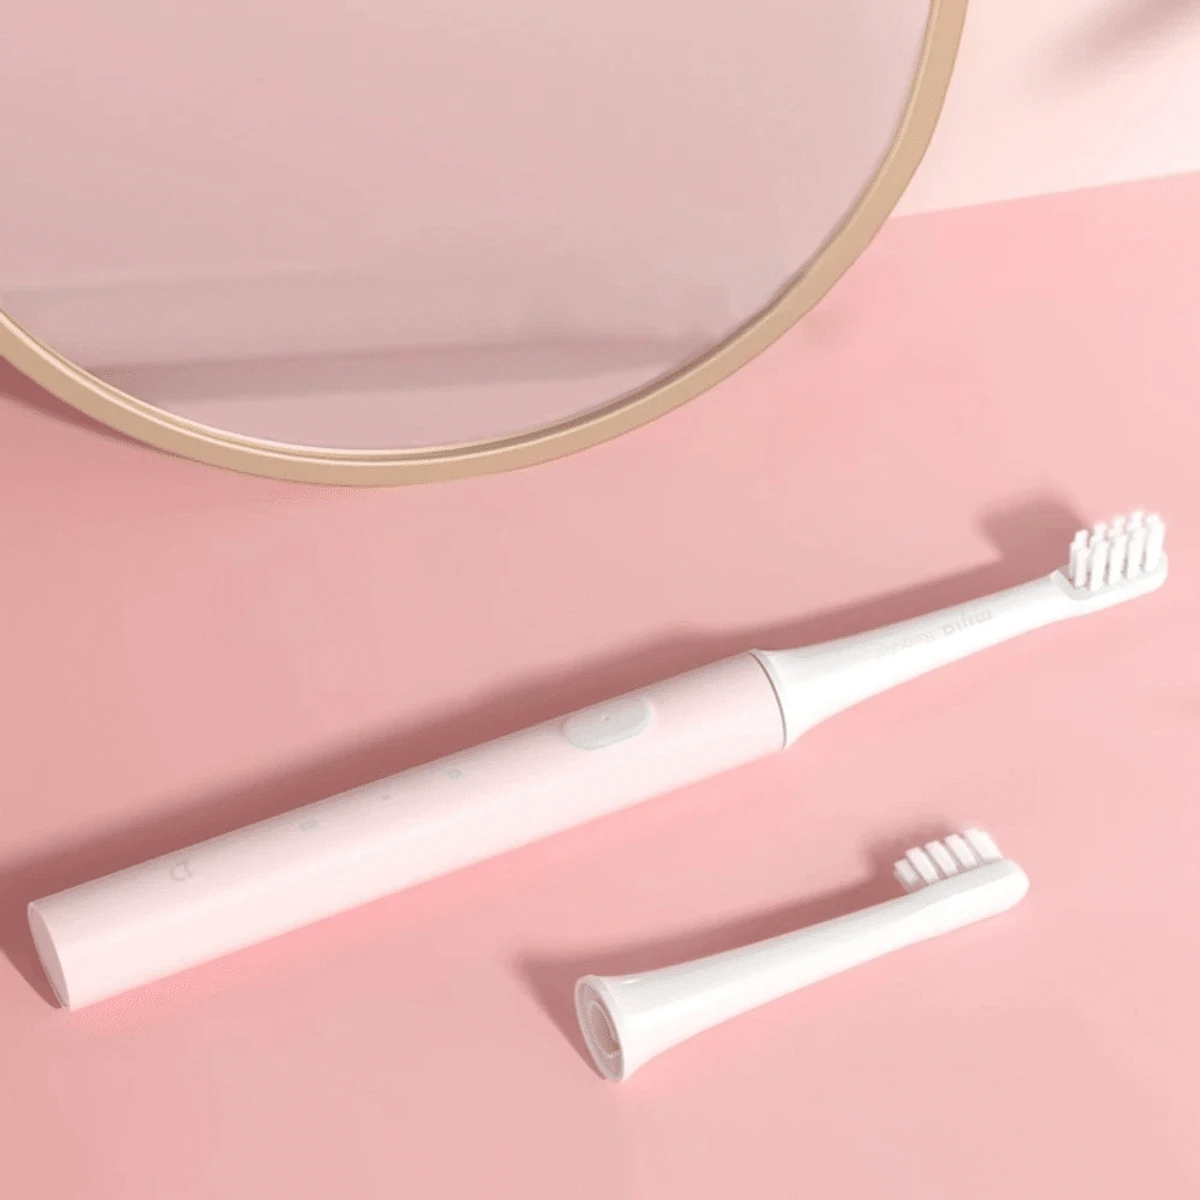 Xiaomi Mijia T100 Mi Smart Electric Toothbrush